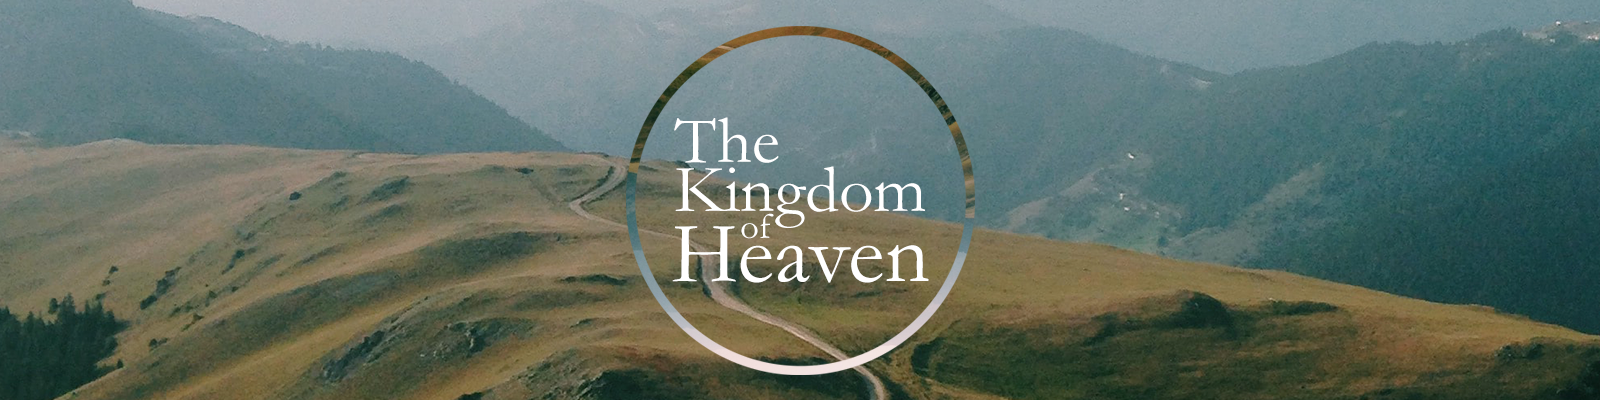 Hard Hearts || The Kingdom of Heaven || Matthew 13:1-23 - St John's ...